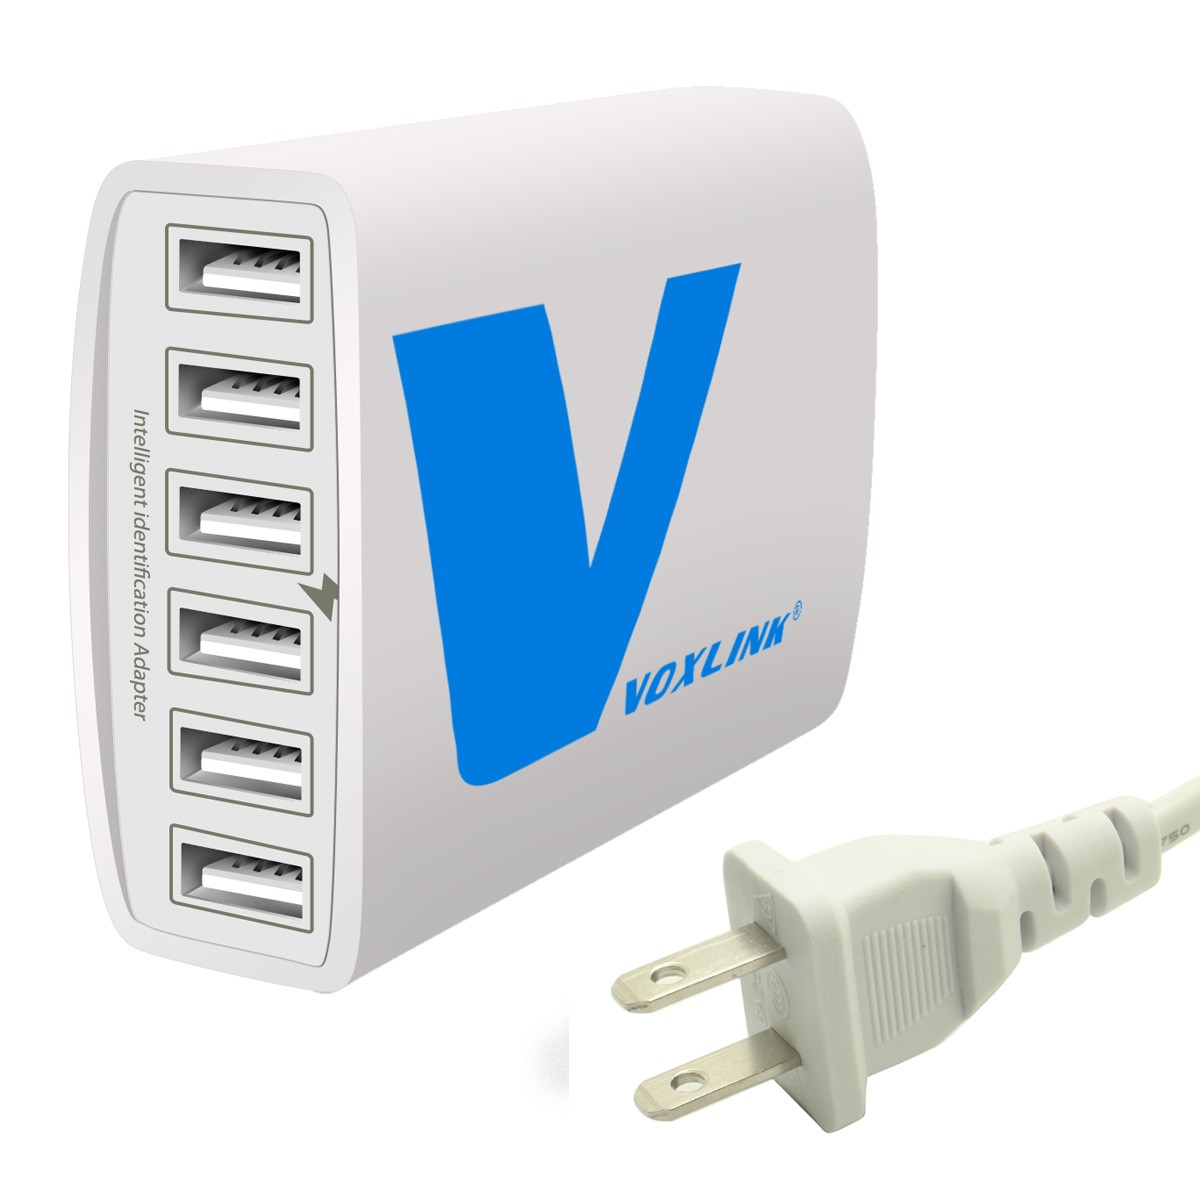 VOXLINK 60W 6 Port USB Charger Travel Adapter 5V/12A Intelligent Detect Charging white 60W 6 Port US